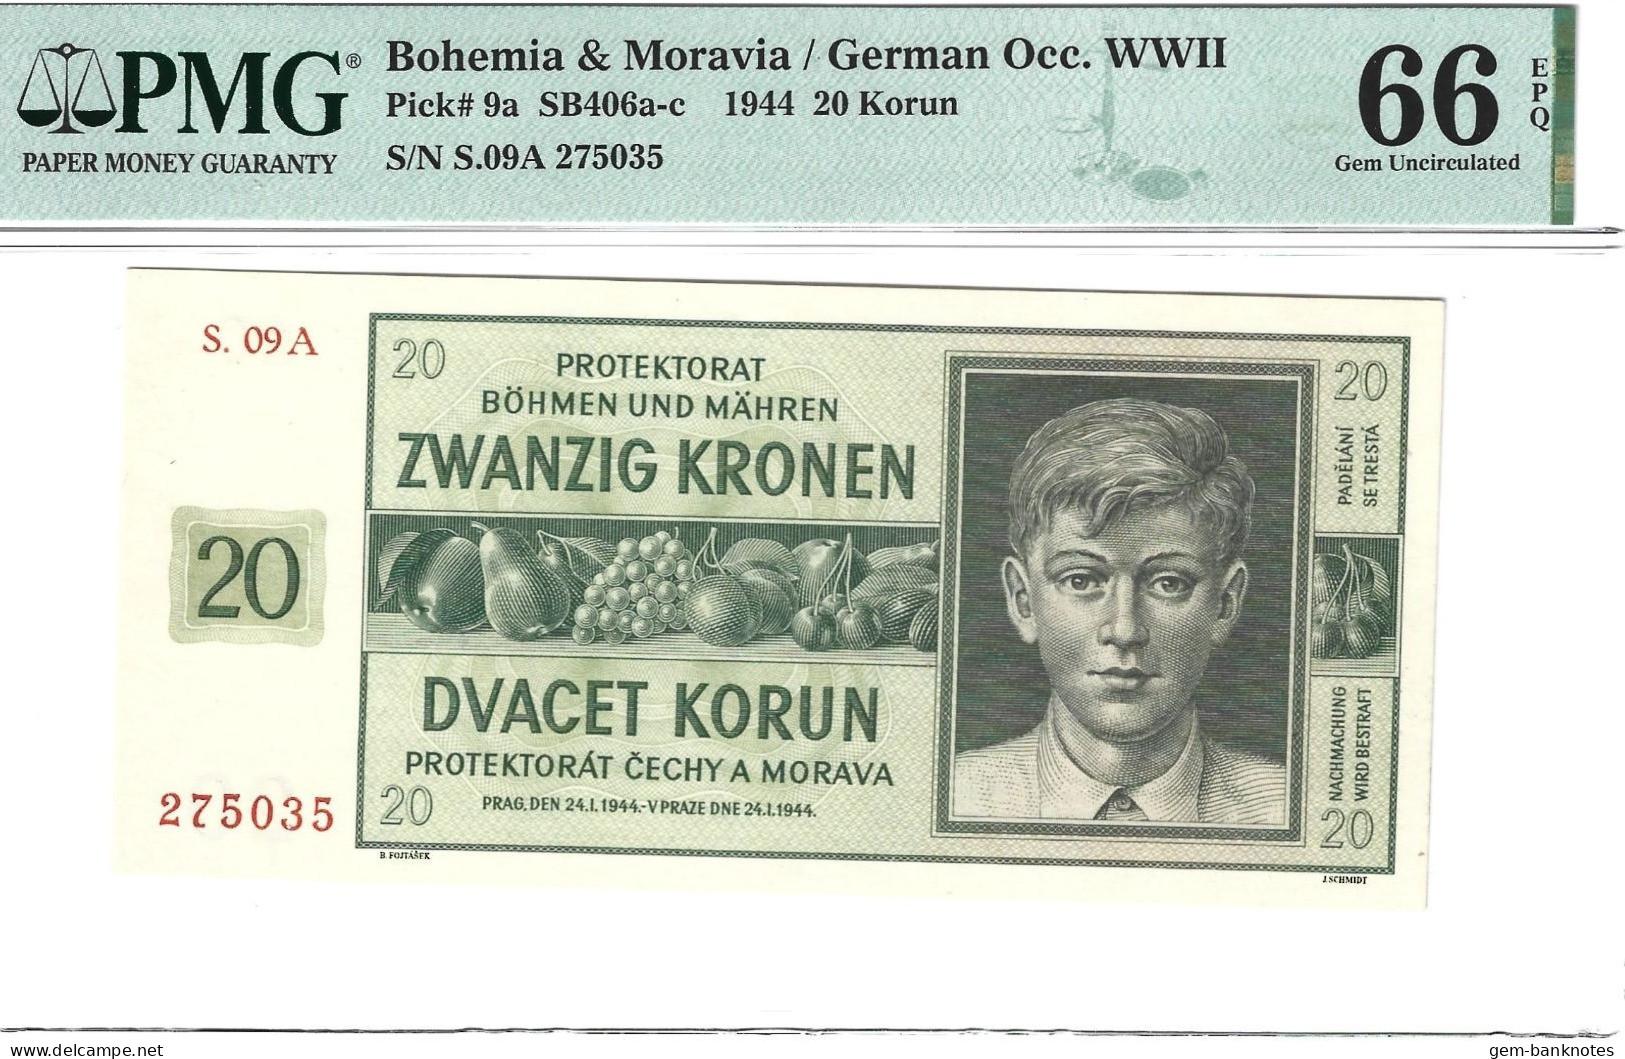 Bohemia & Moravia/German Occupation WWII 20 Korun 1944 P9a Graded 66 EPQ Gem Uncirculaed By PMG - Czechoslovakia